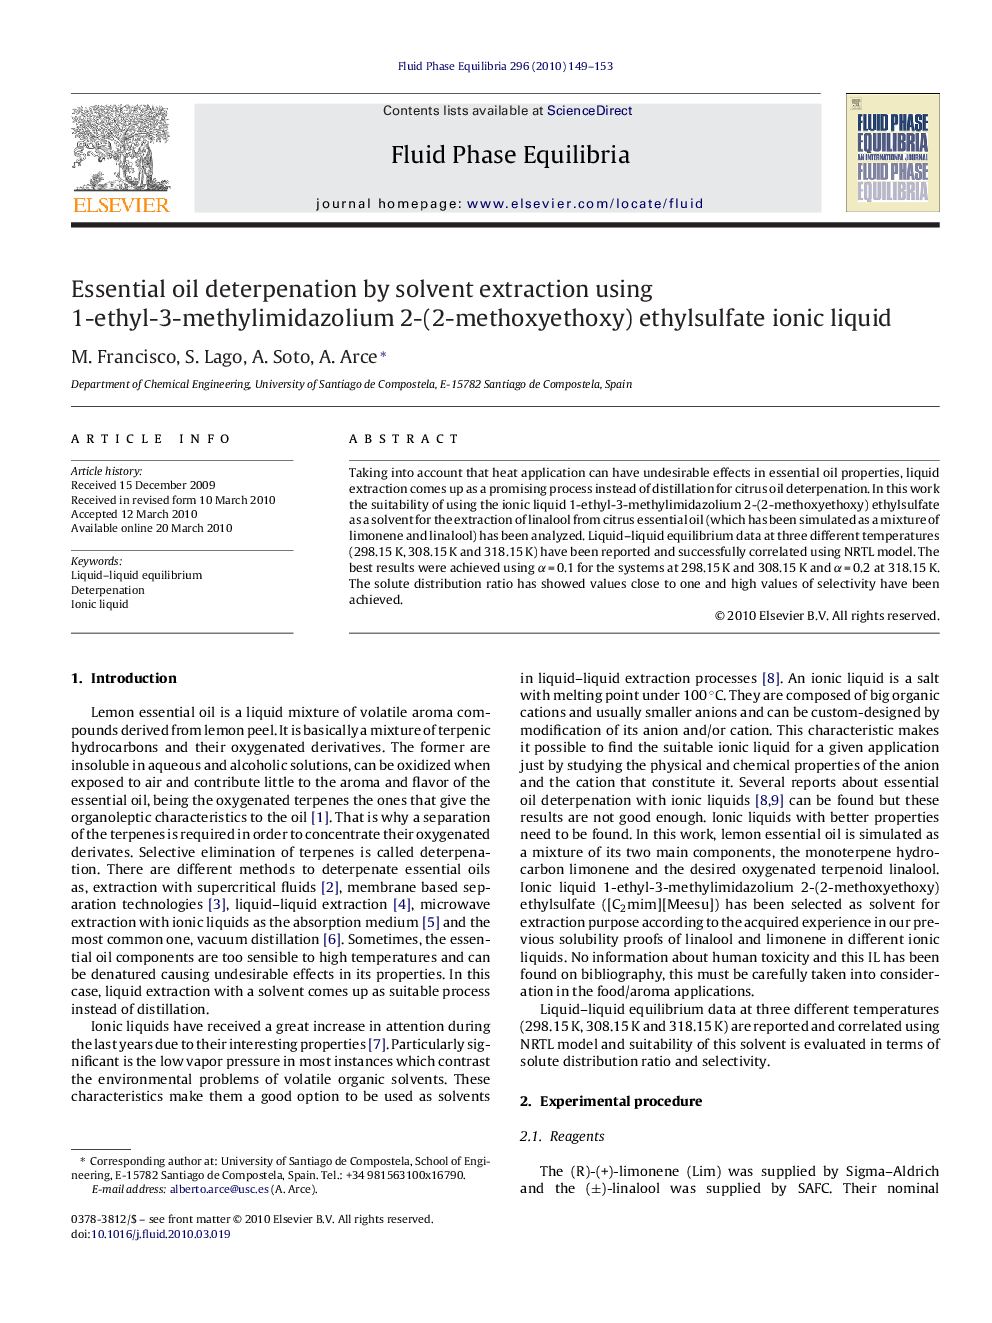 Essential oil deterpenation by solvent extraction using 1-ethyl-3-methylimidazolium 2-(2-methoxyethoxy) ethylsulfate ionic liquid